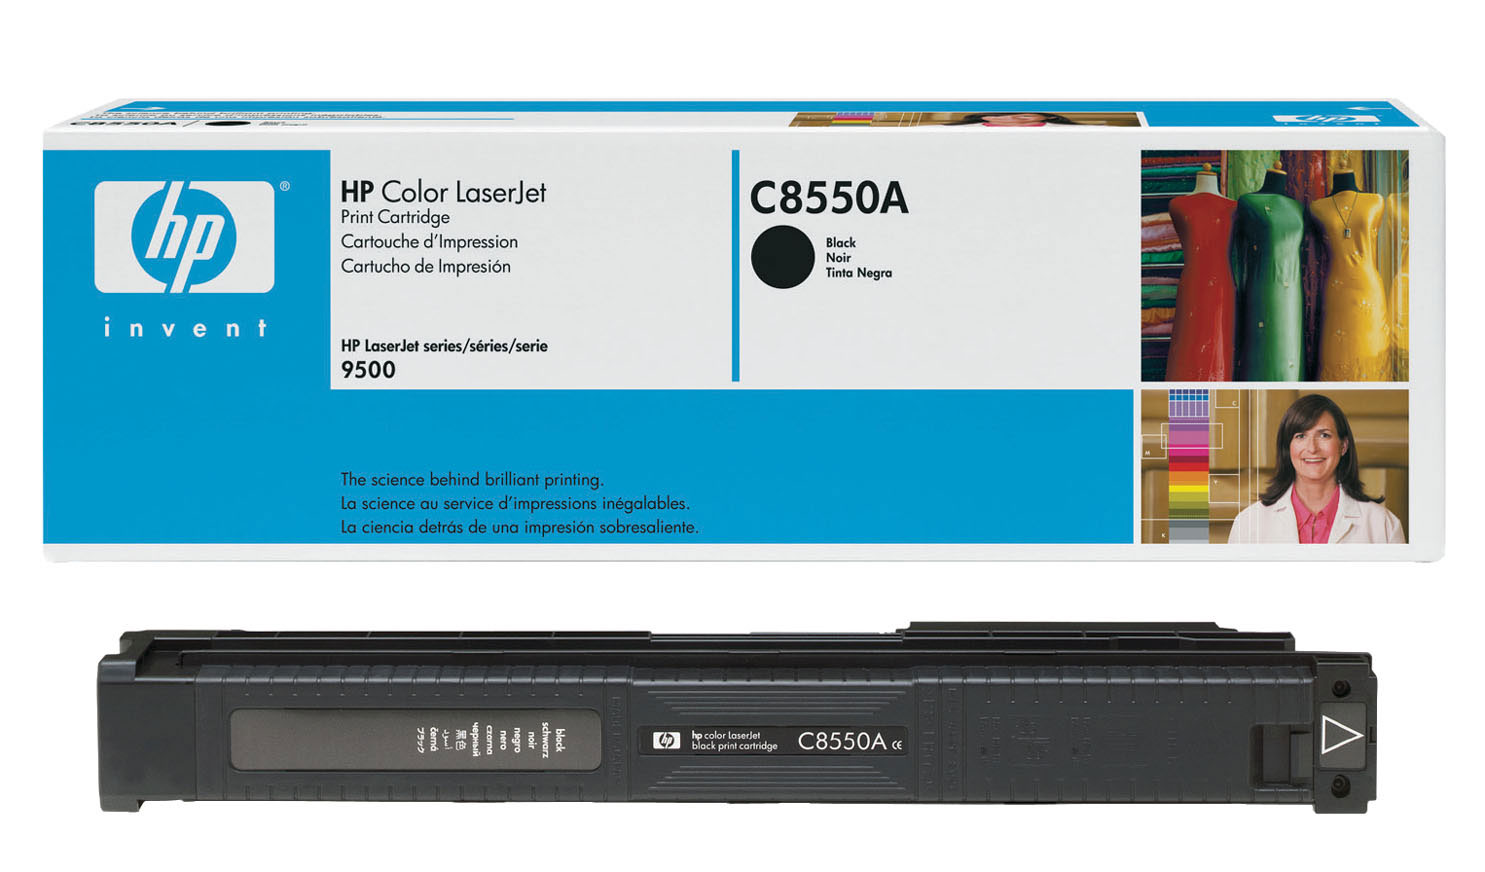  C8550A Black printer cartridge